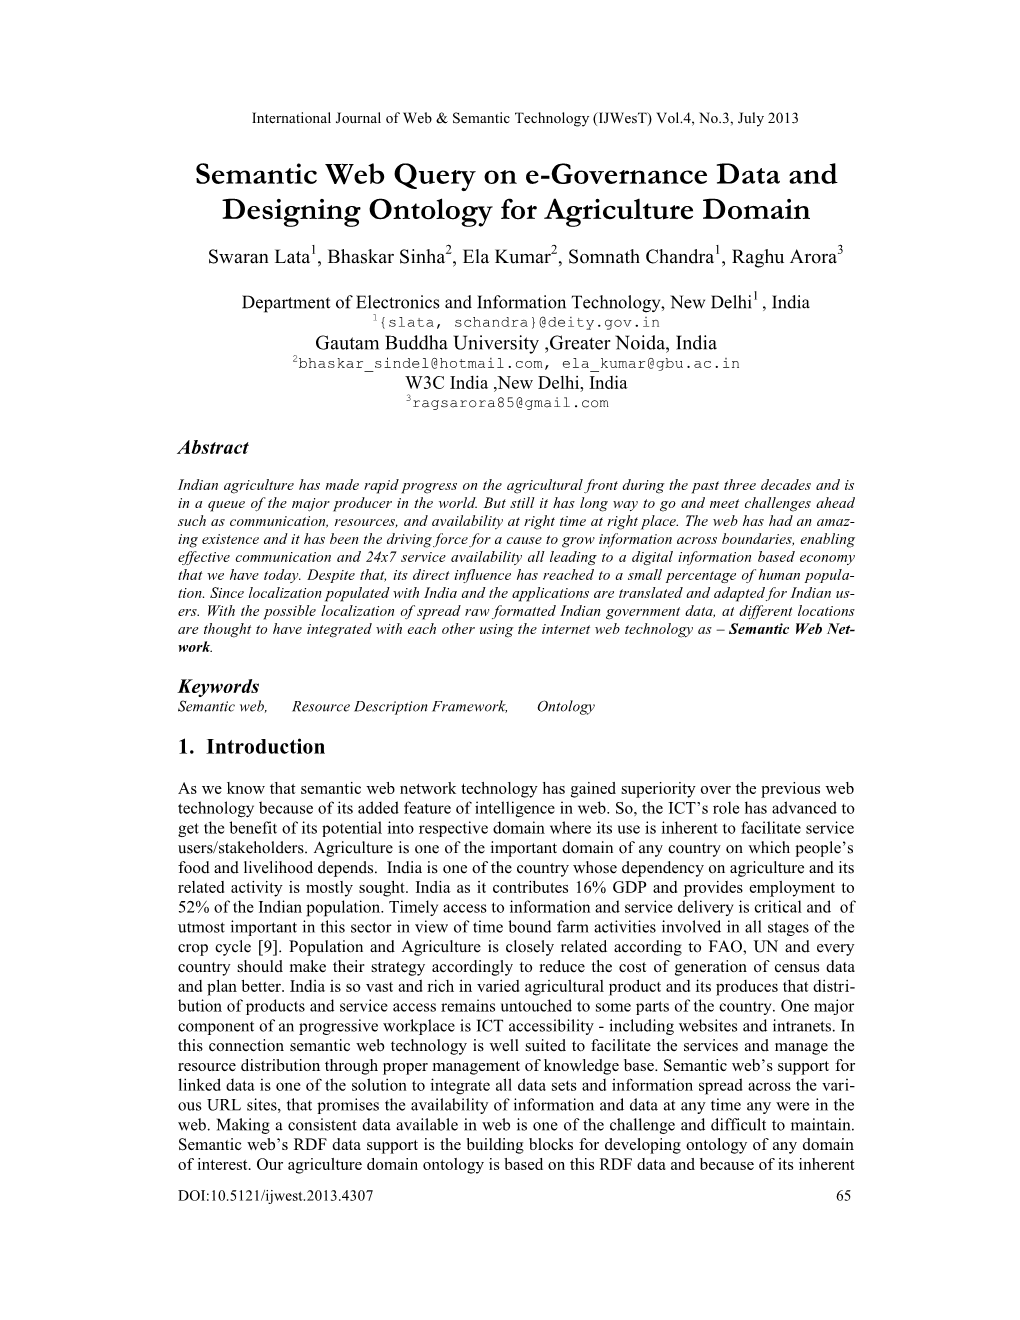 Semantic Web Query on E-Governance Data and Designing Ontology for Agriculture Domain Swaran Lata1, Bhaskar Sinha2, Ela Kumar2, Somnath Chandra1, Raghu Arora3